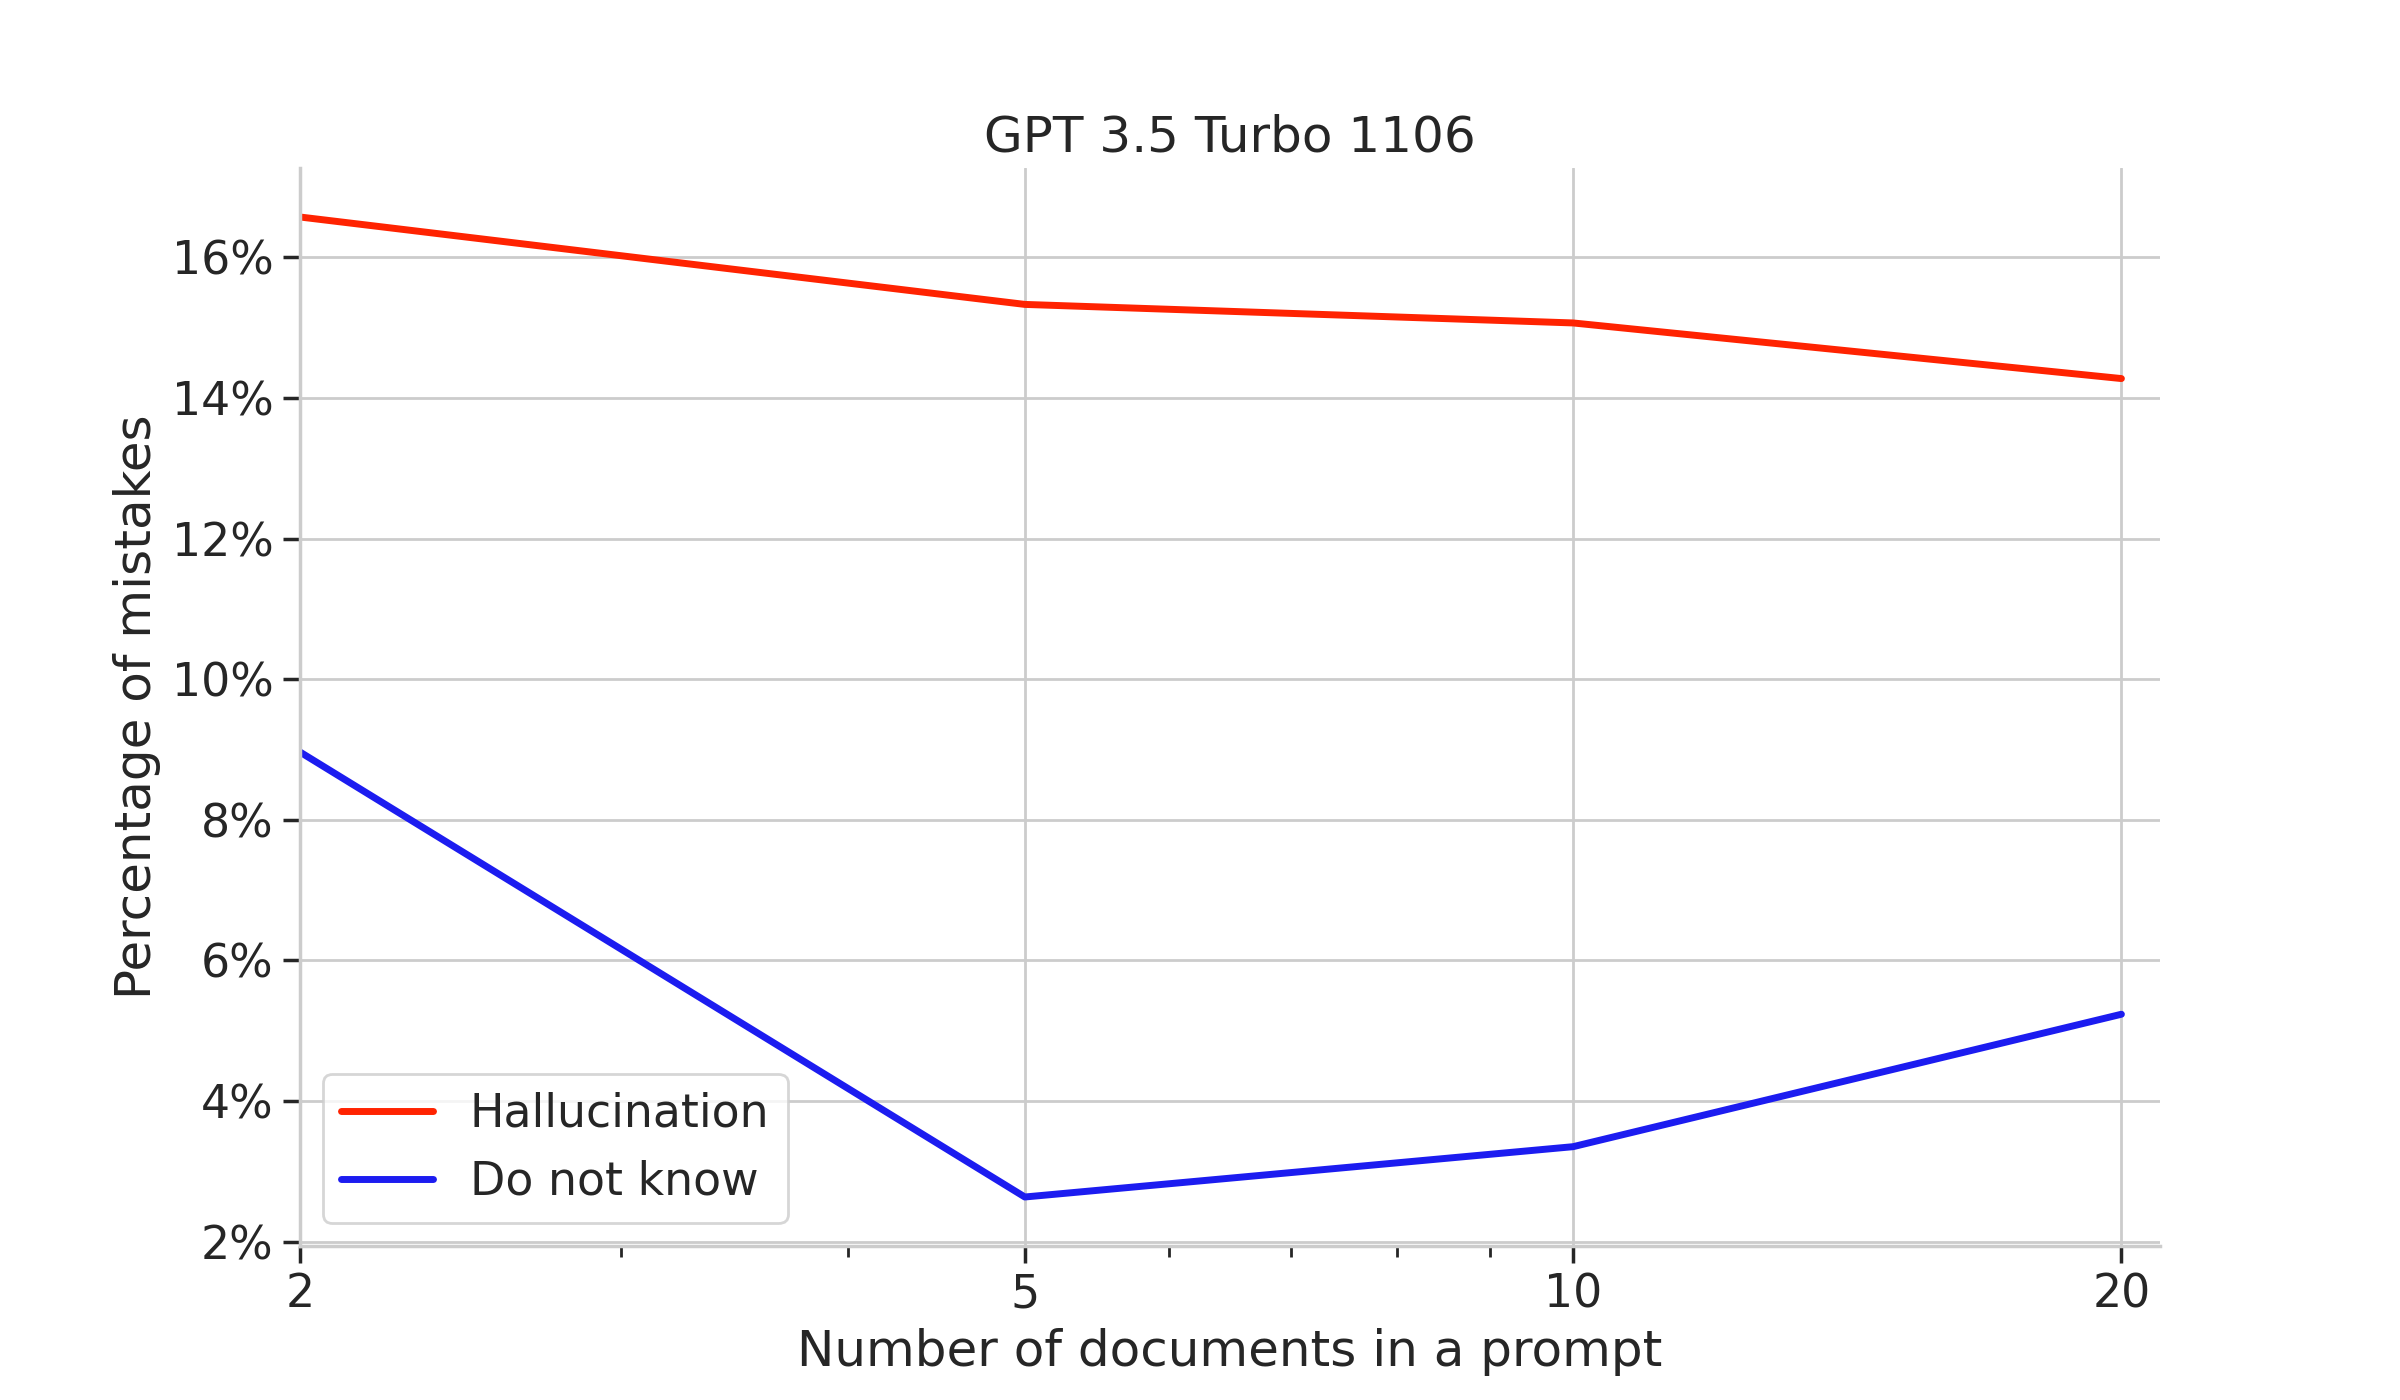 Mistake analysis of GPT 3.5 Turbo 1106